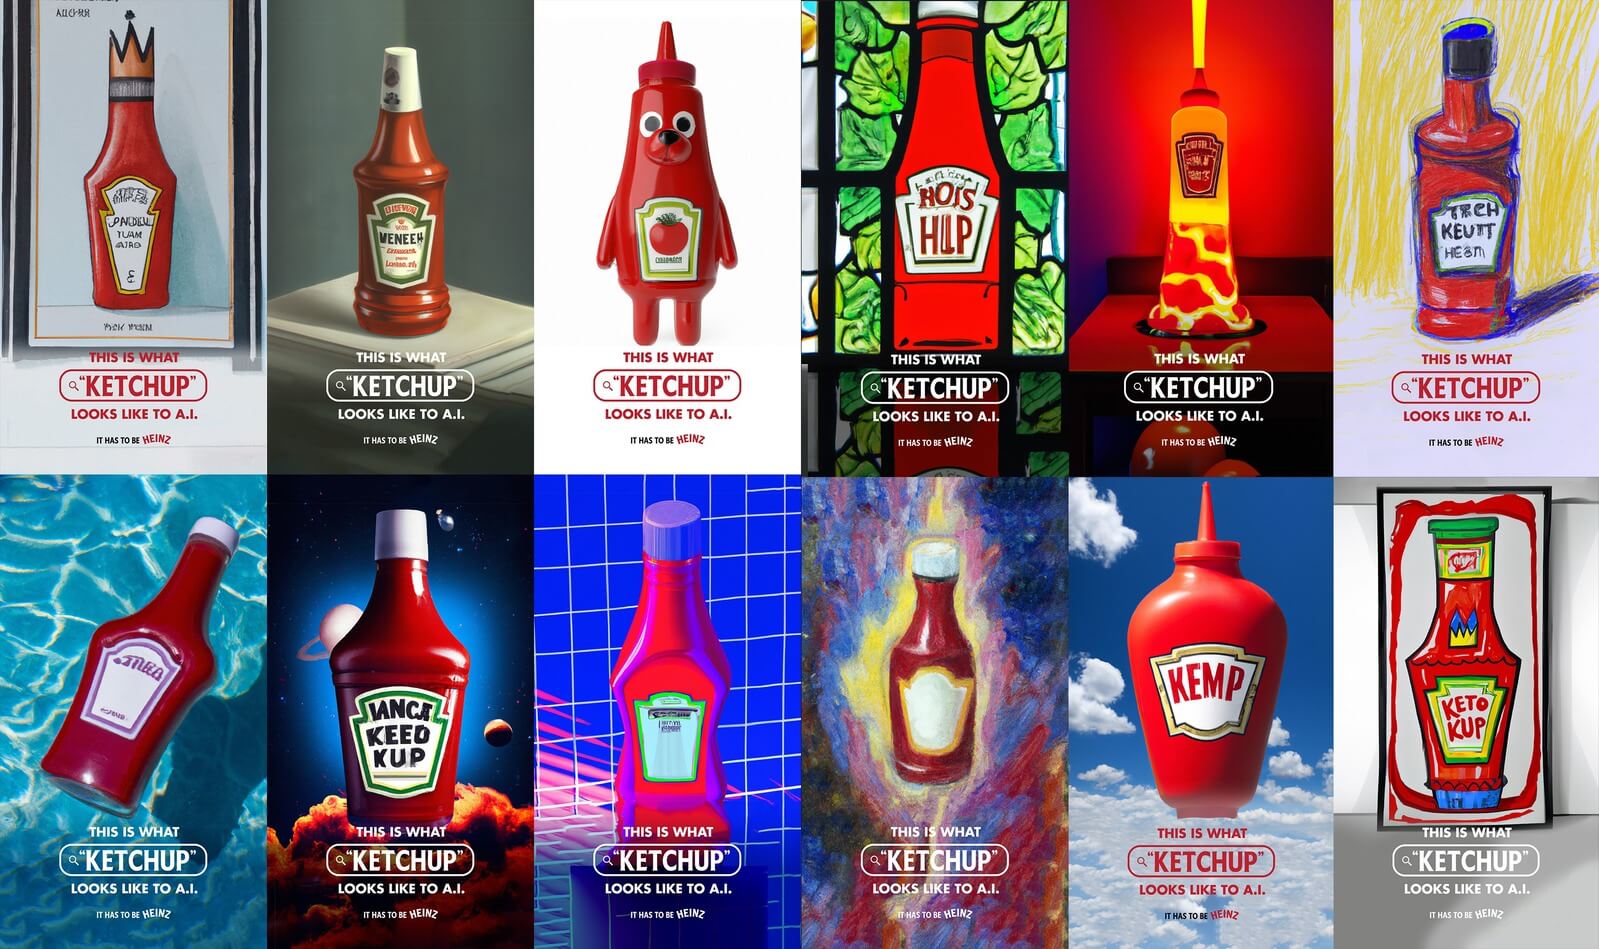 kampania “AI Ketchup” firmy Heinz